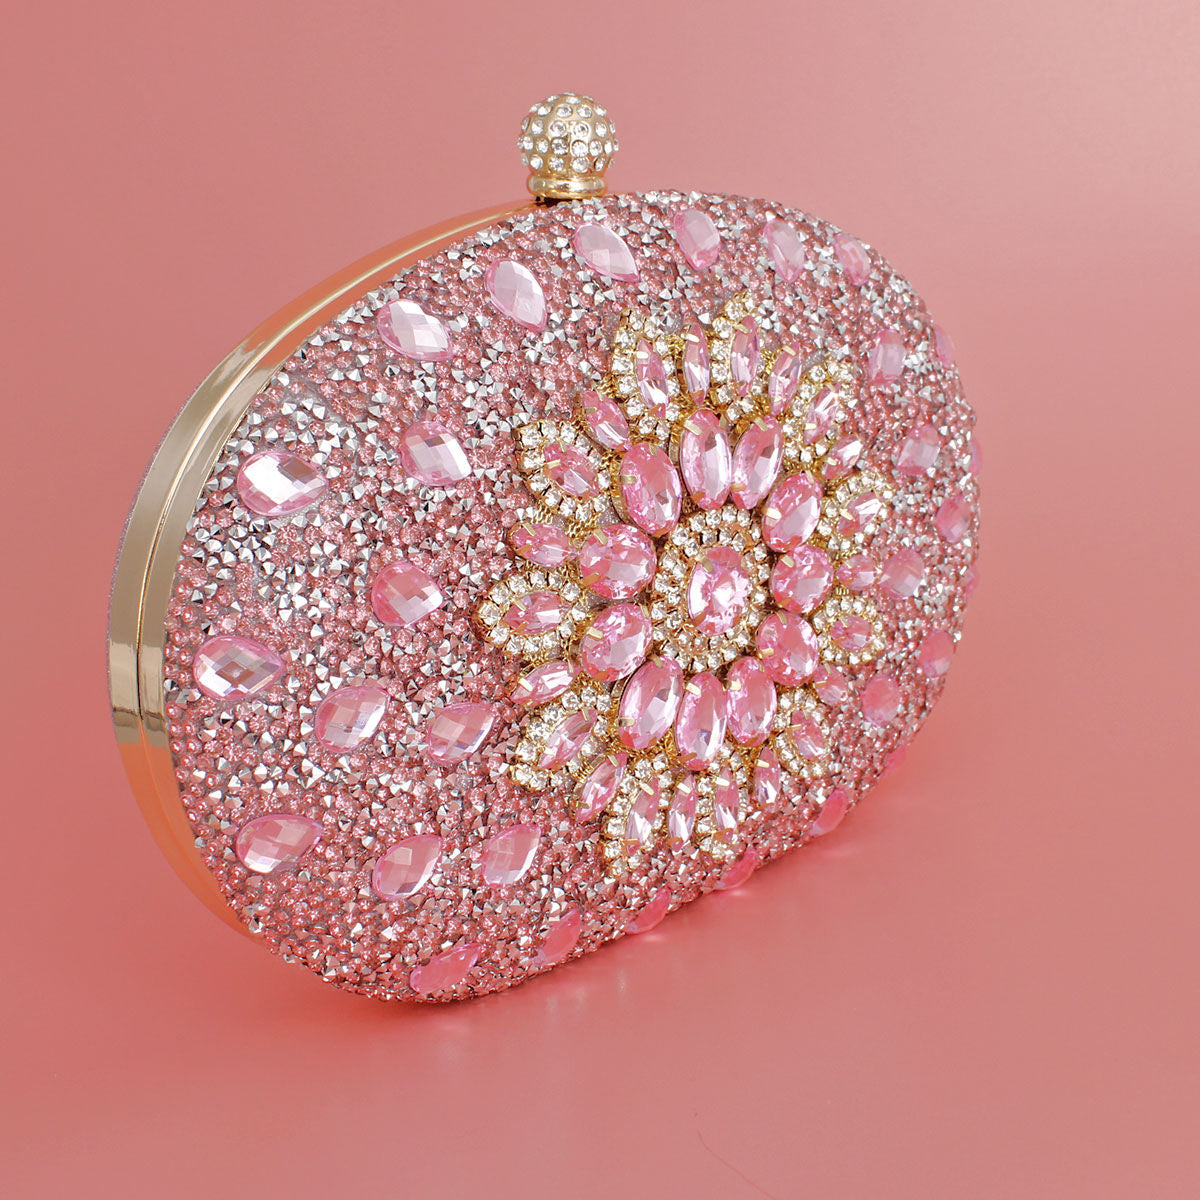 Clutch Pink Crystal Hard Case Bag for Women